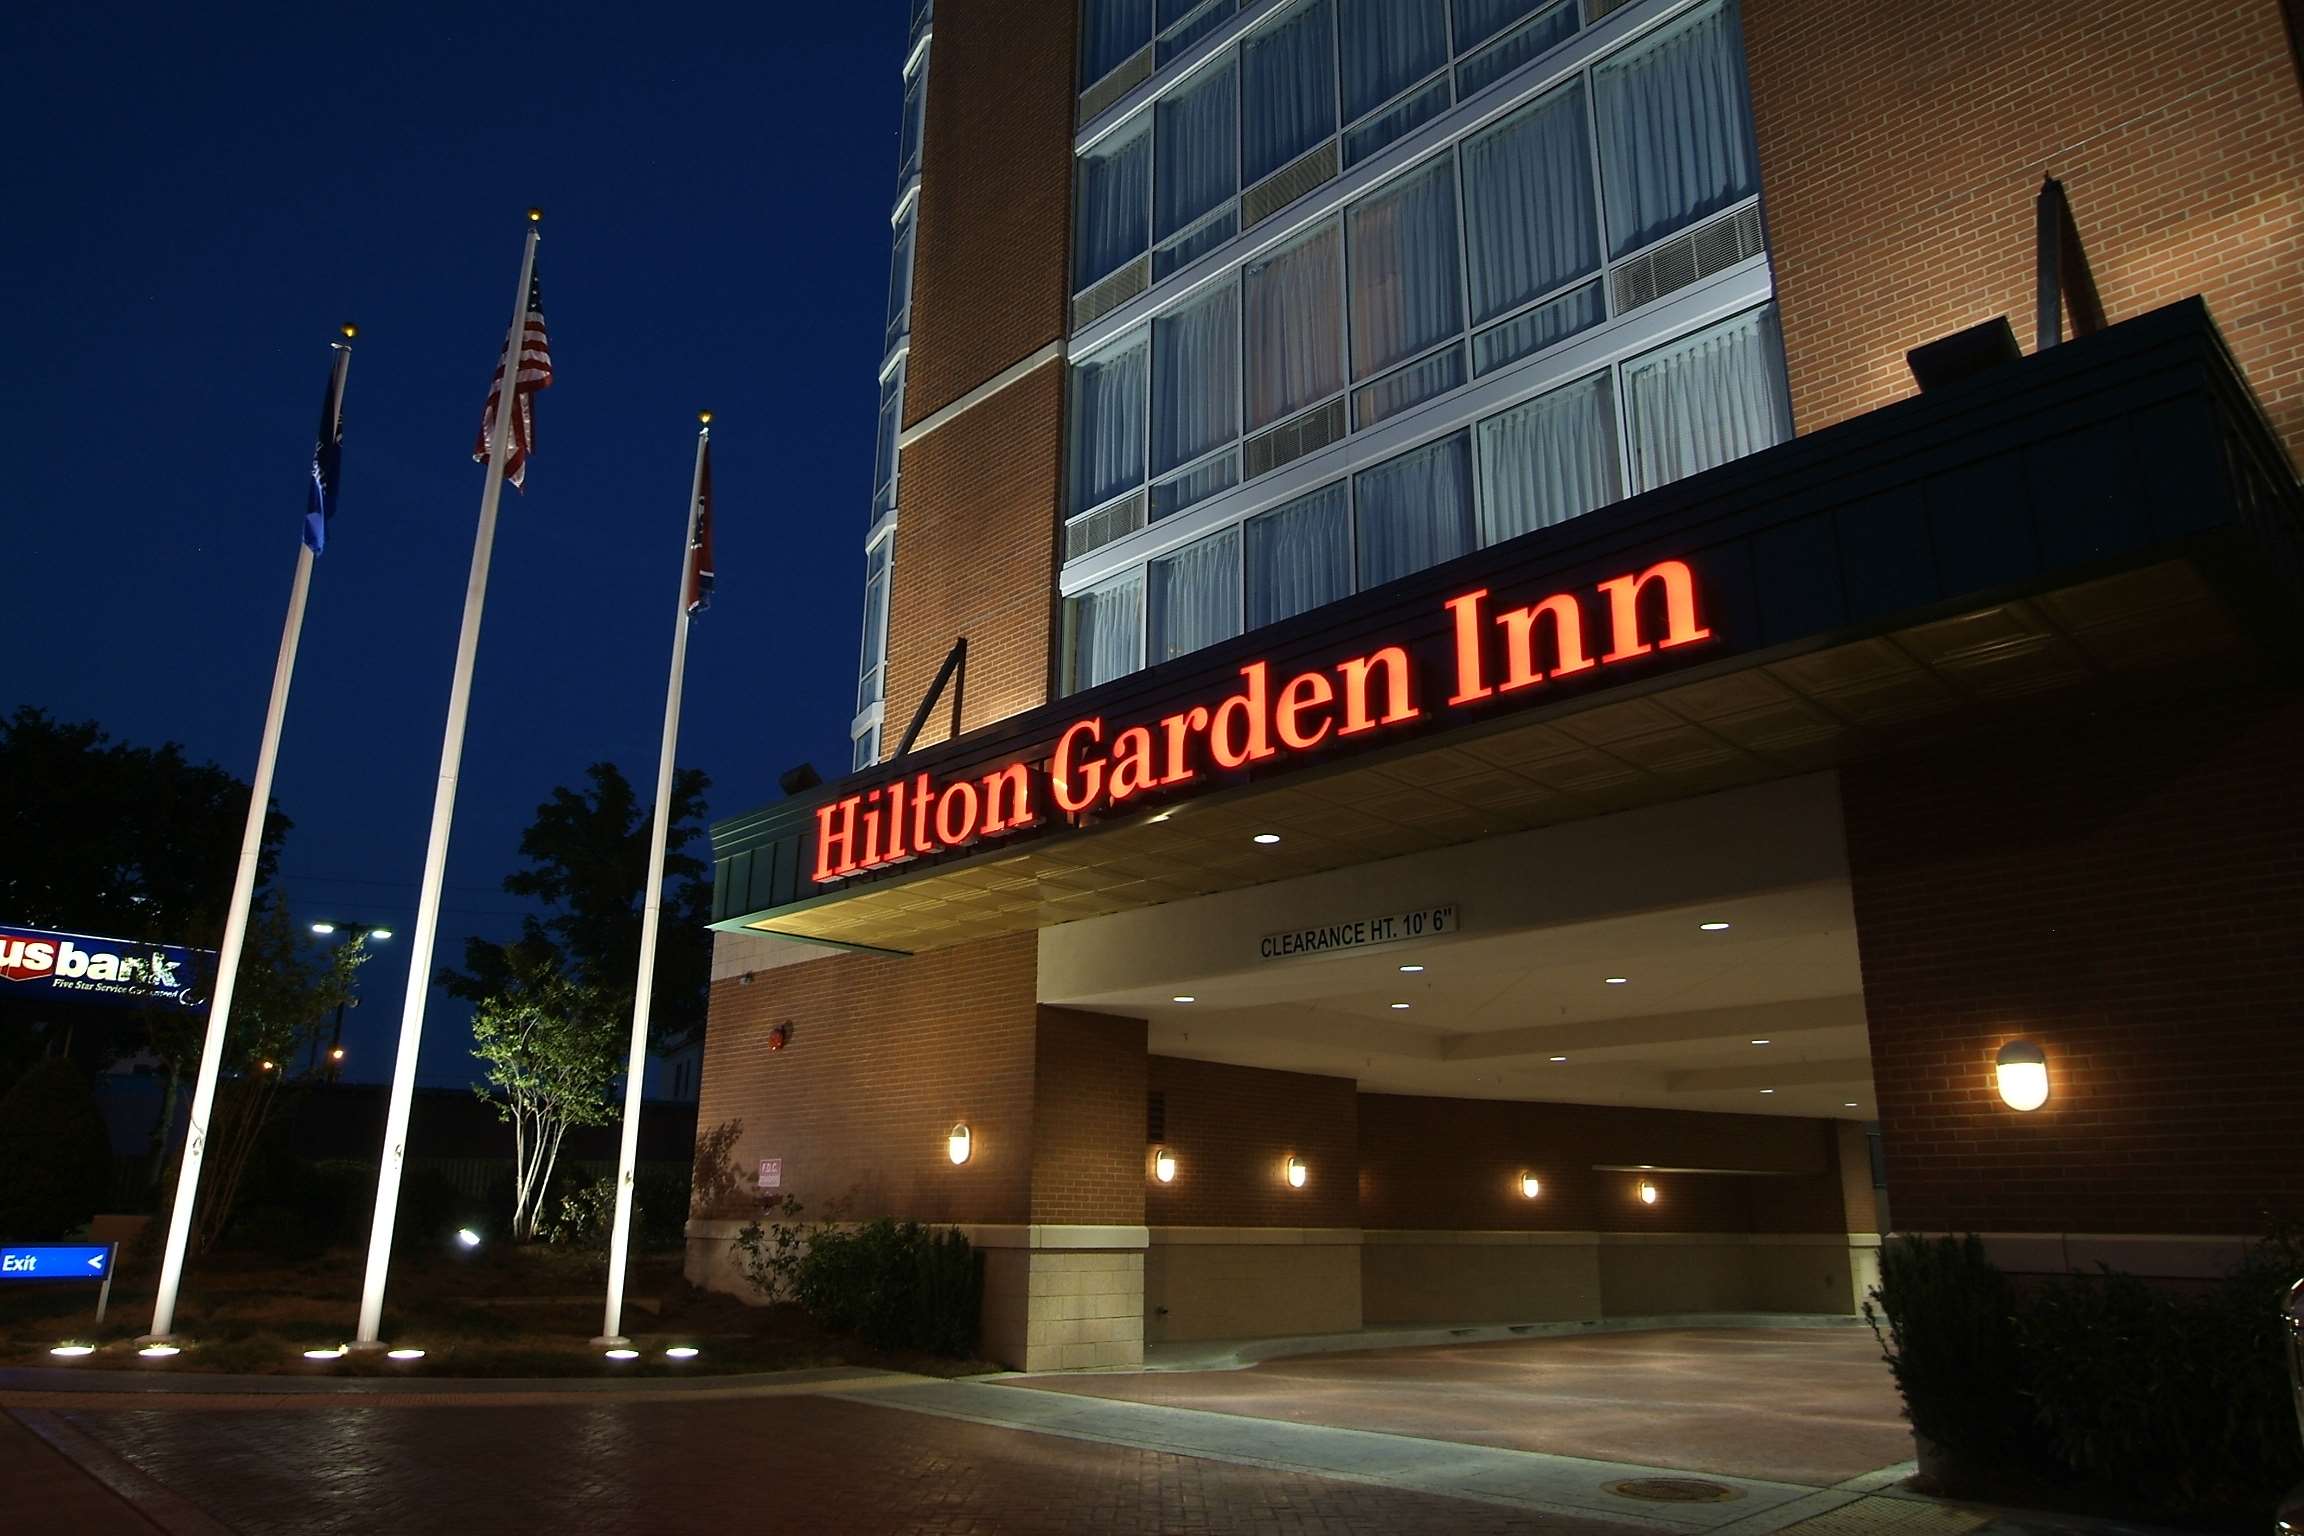 Hilton Garden Inn Nashville Vanderbilt 1715 Broadway Nashville Tn Hotels And Motels Mapquest